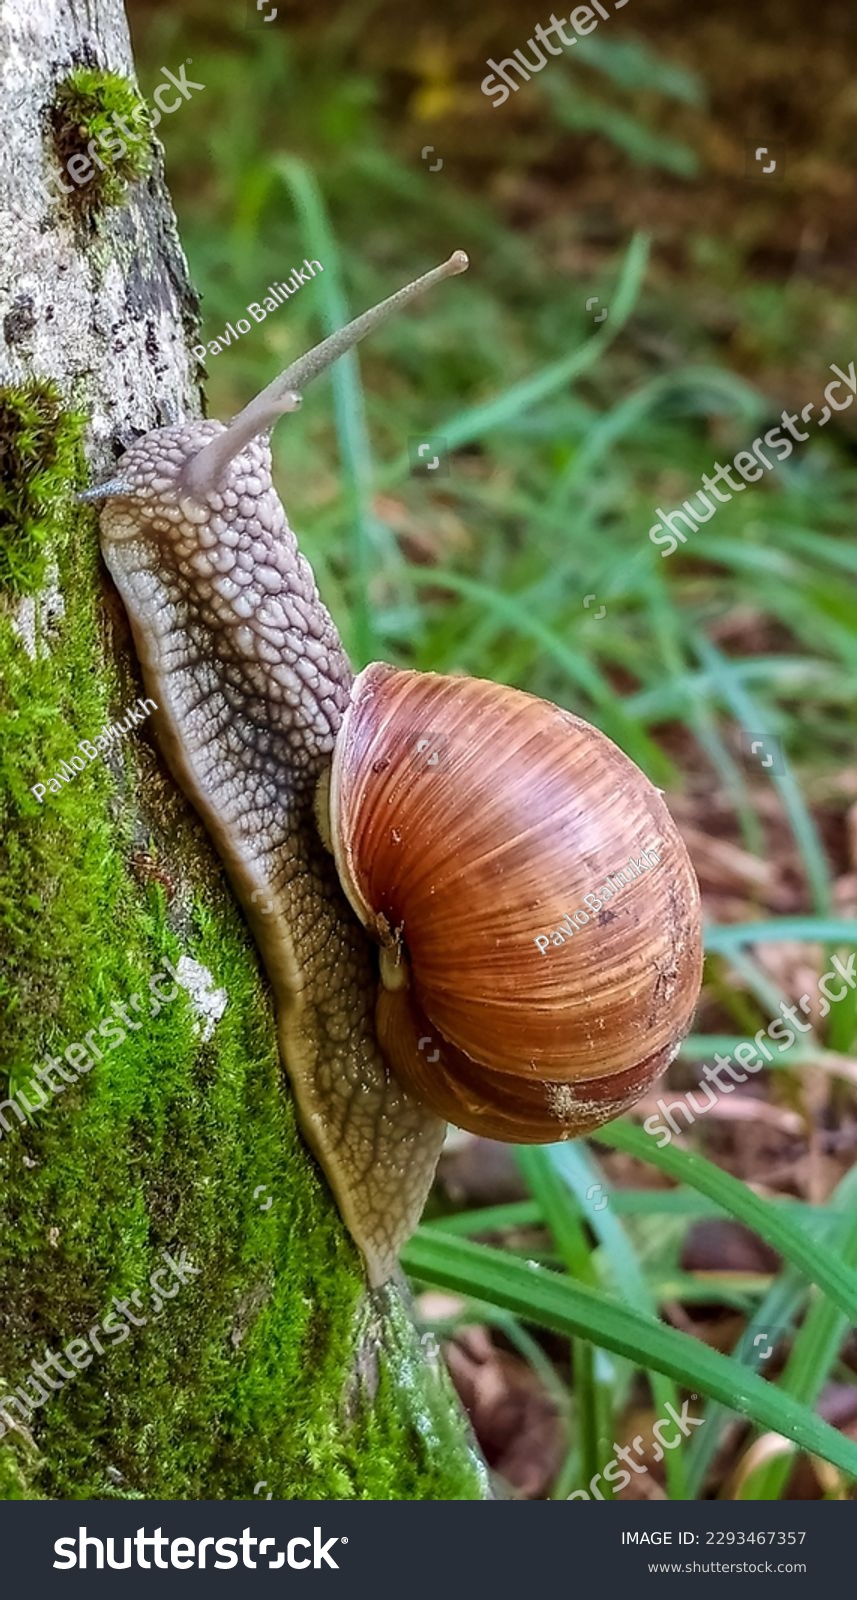 Big brown snail slug crawling in the garden. Helix pomatia garden snail in close up view. Common names the Roman snail, Burgundy snail, or escargot #2293467357